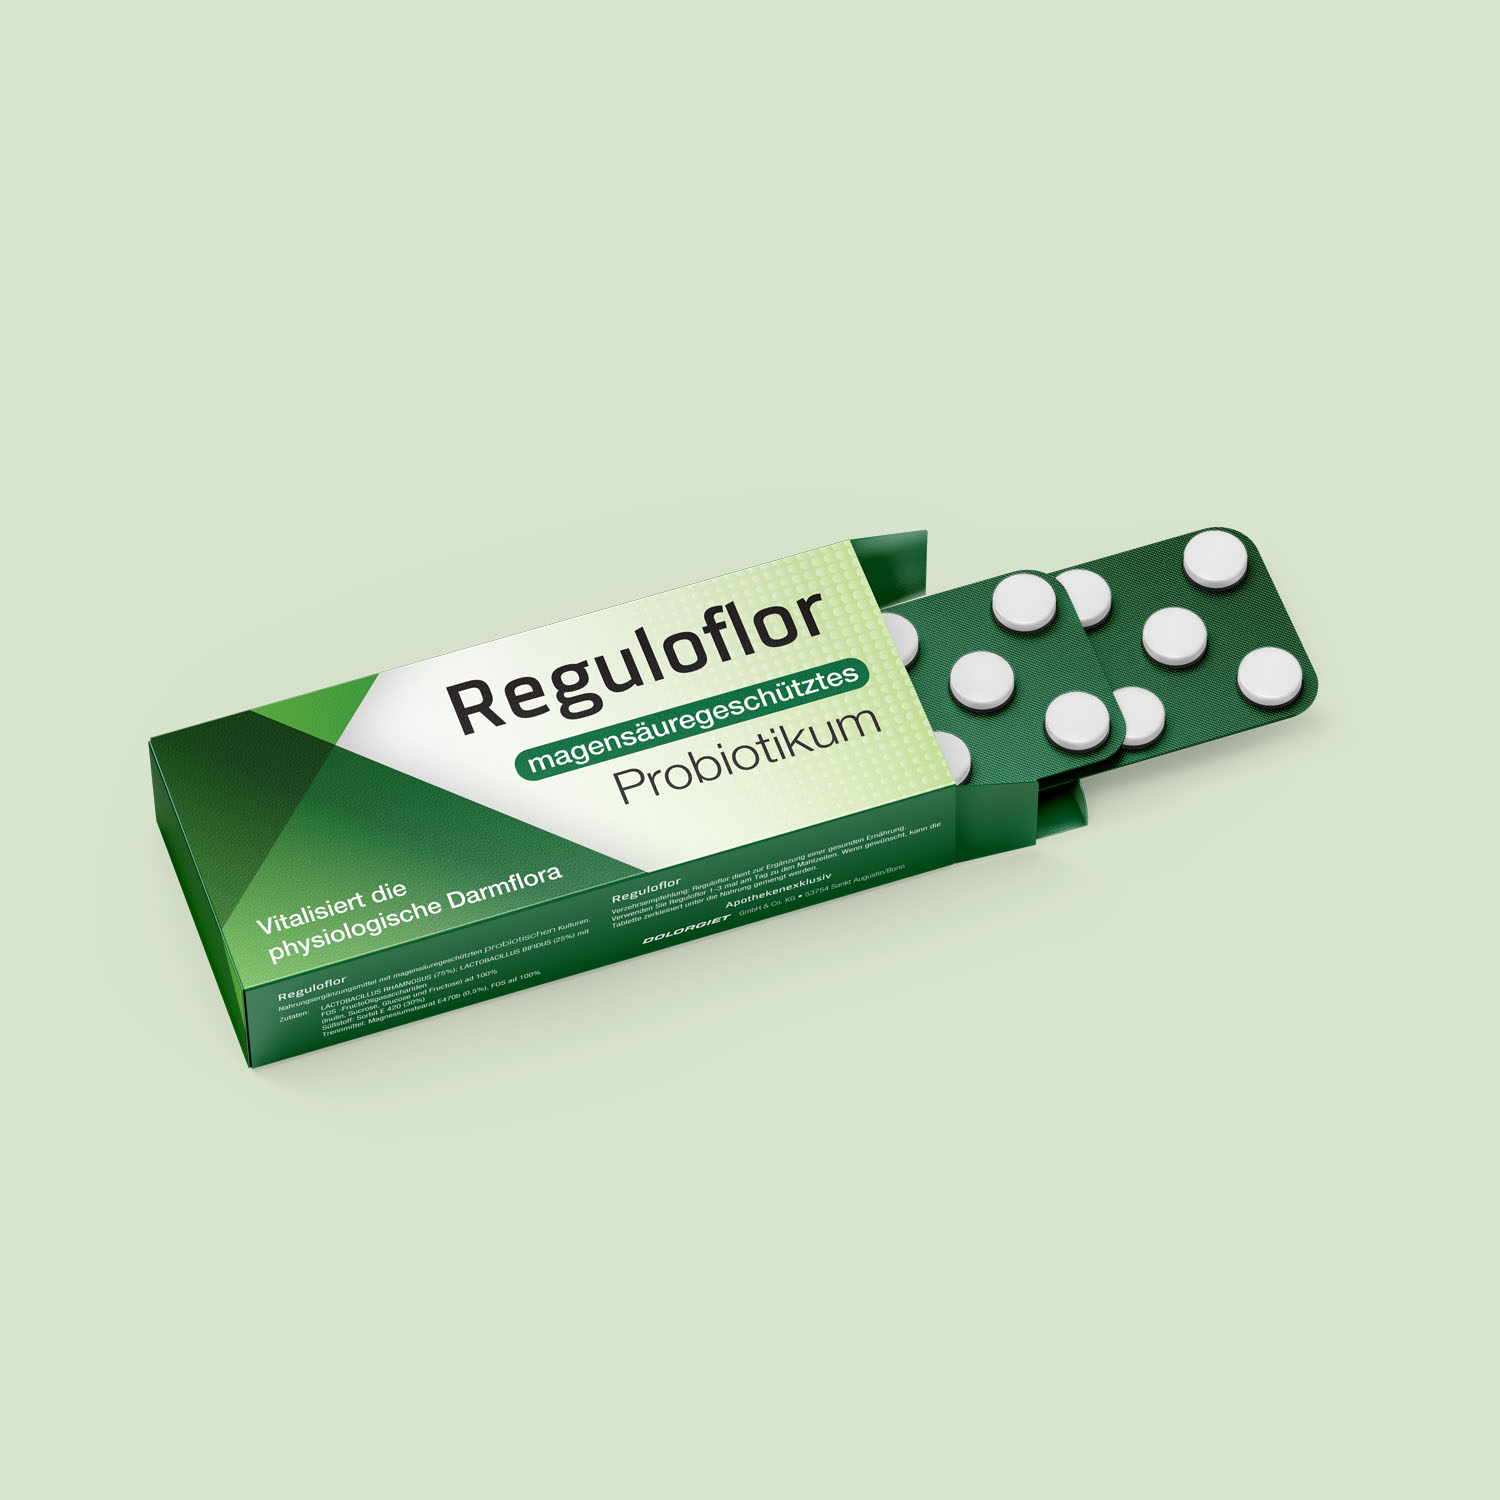 Product Label Design for Reguloflor Probiotic